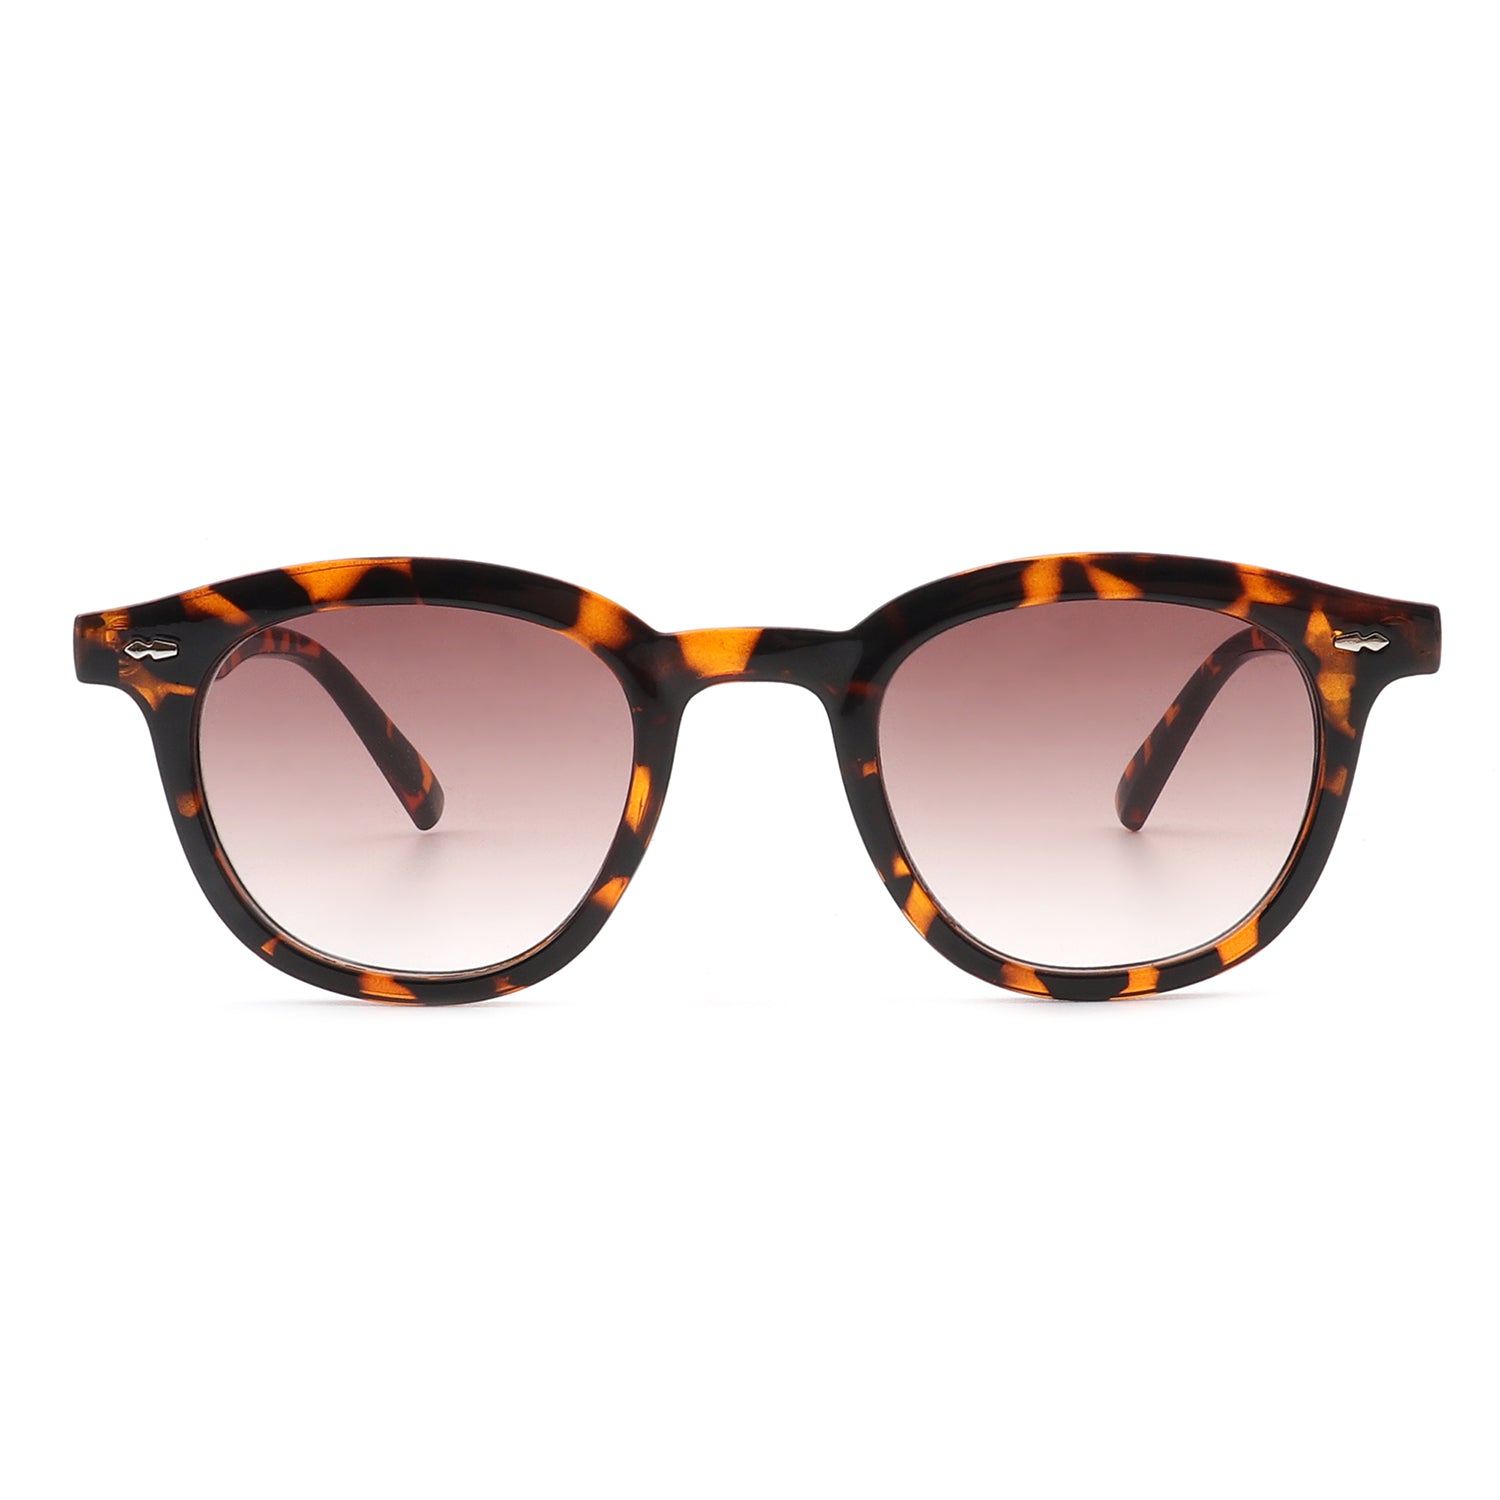 S1181 - Round Retro Circle Vintage Fashion Sunglasses